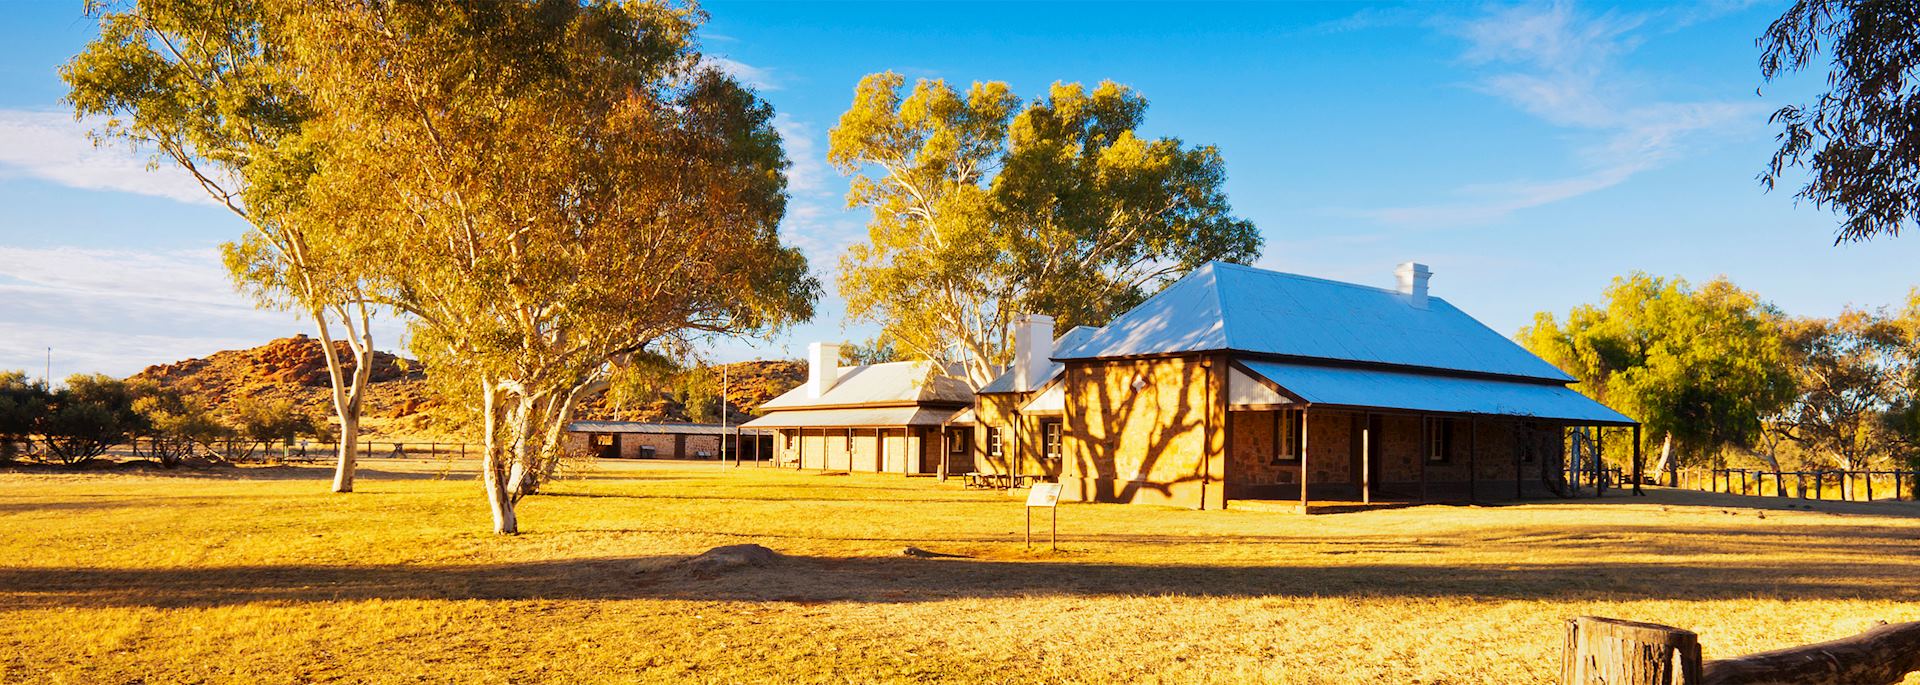 Telegraph station, Alice Springs